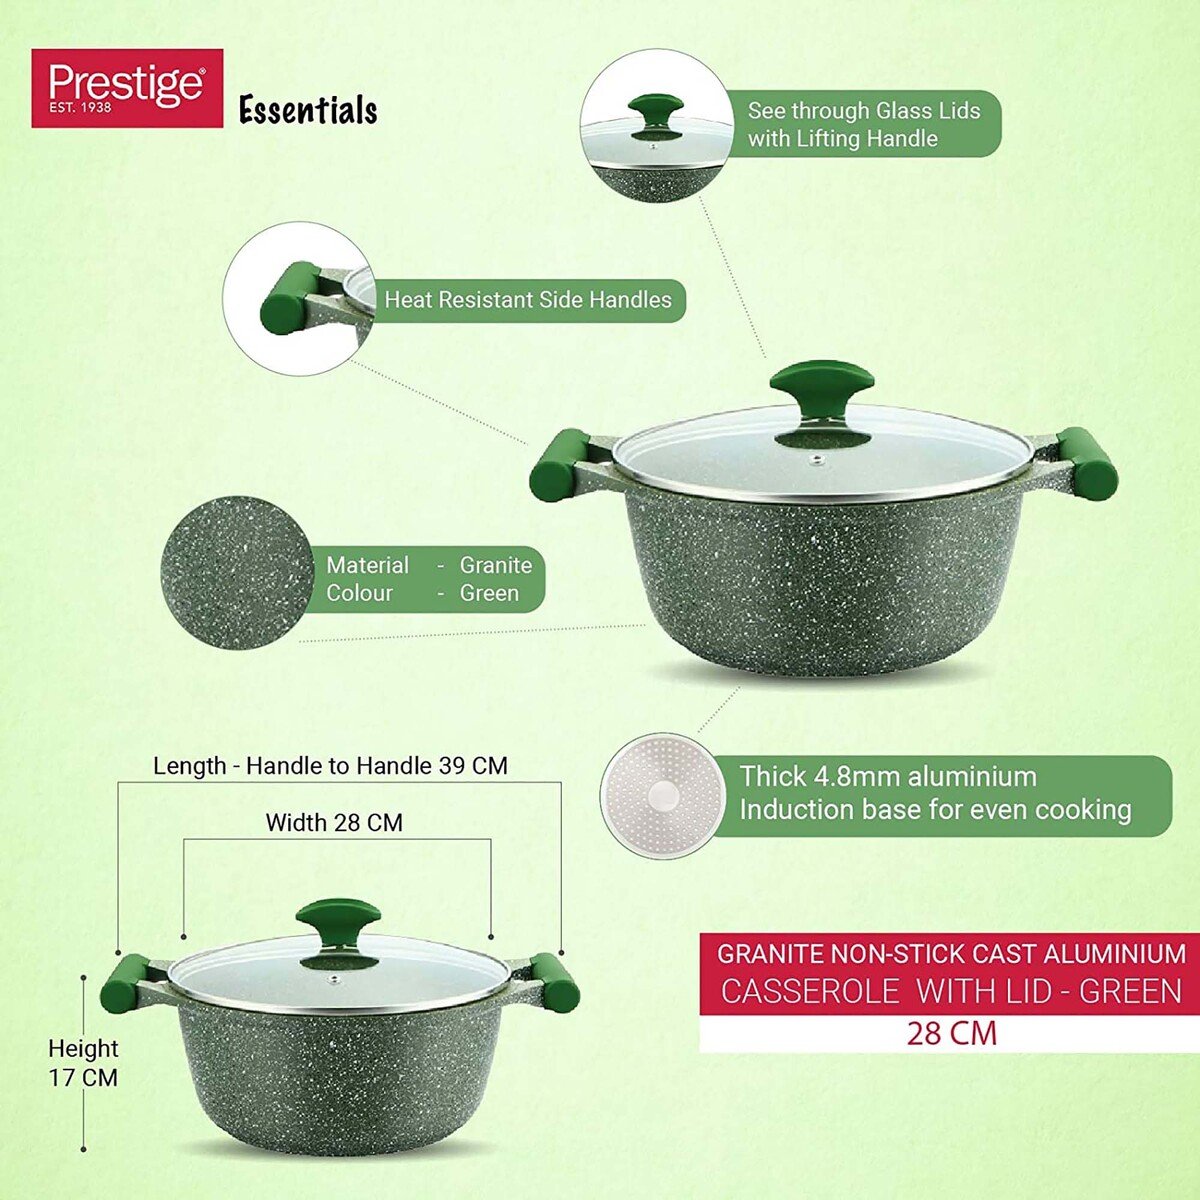 Prestige Essentials Granite Non-Stick Cast Aluminium Casserole with Lid, 28 cm, Green, PR81111